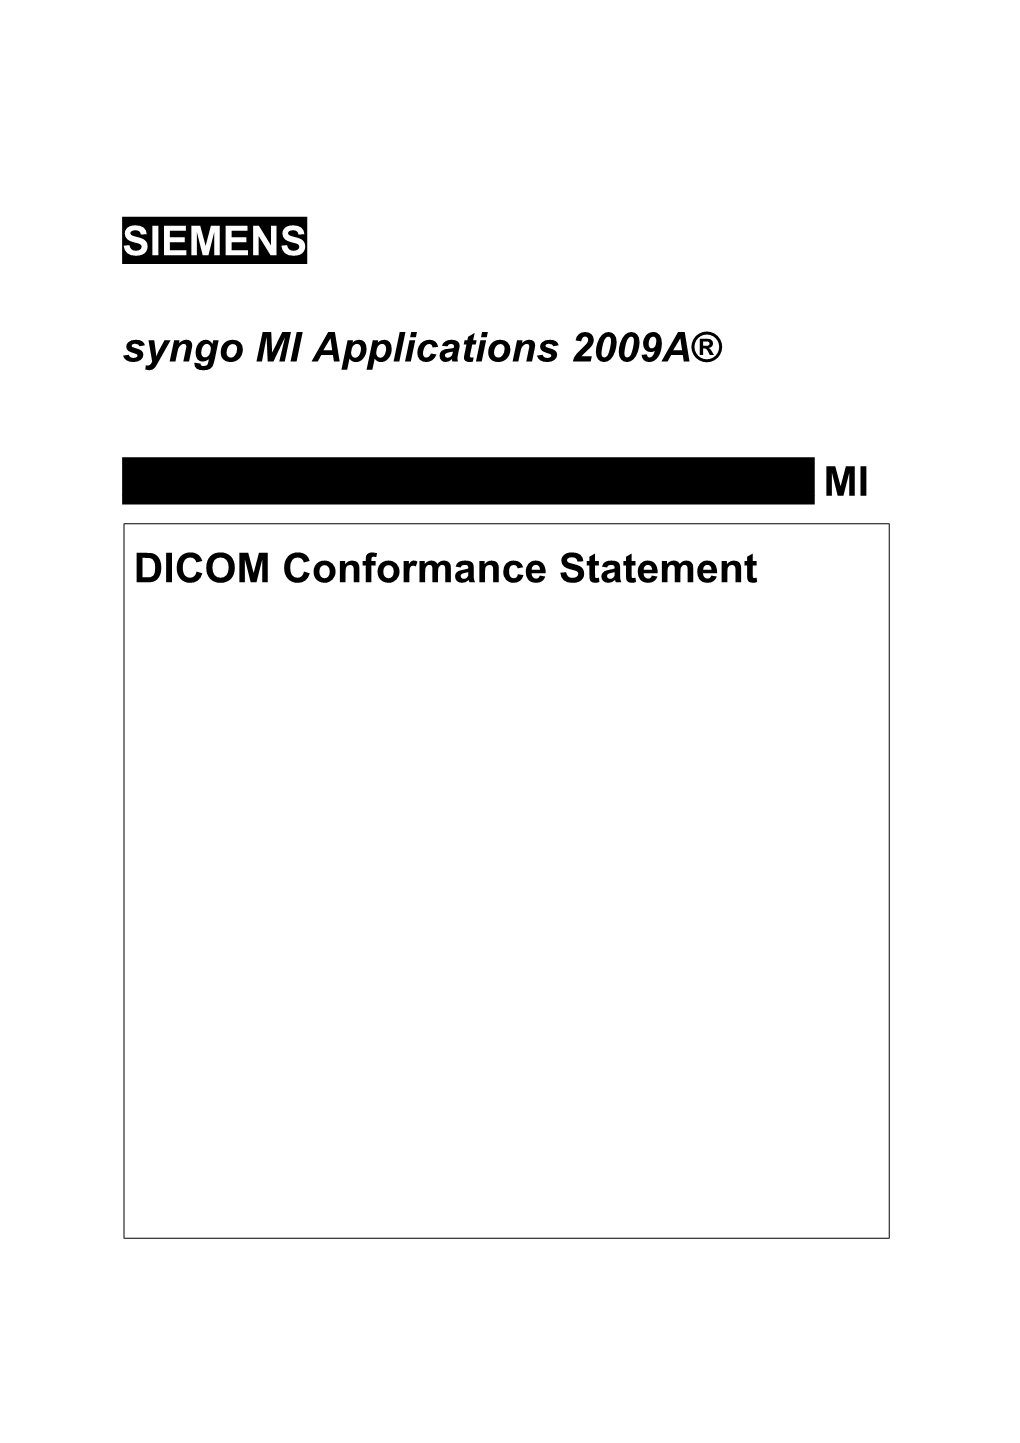 SIEMENS Syngo MI Applications 2009A® DICOM Conformance